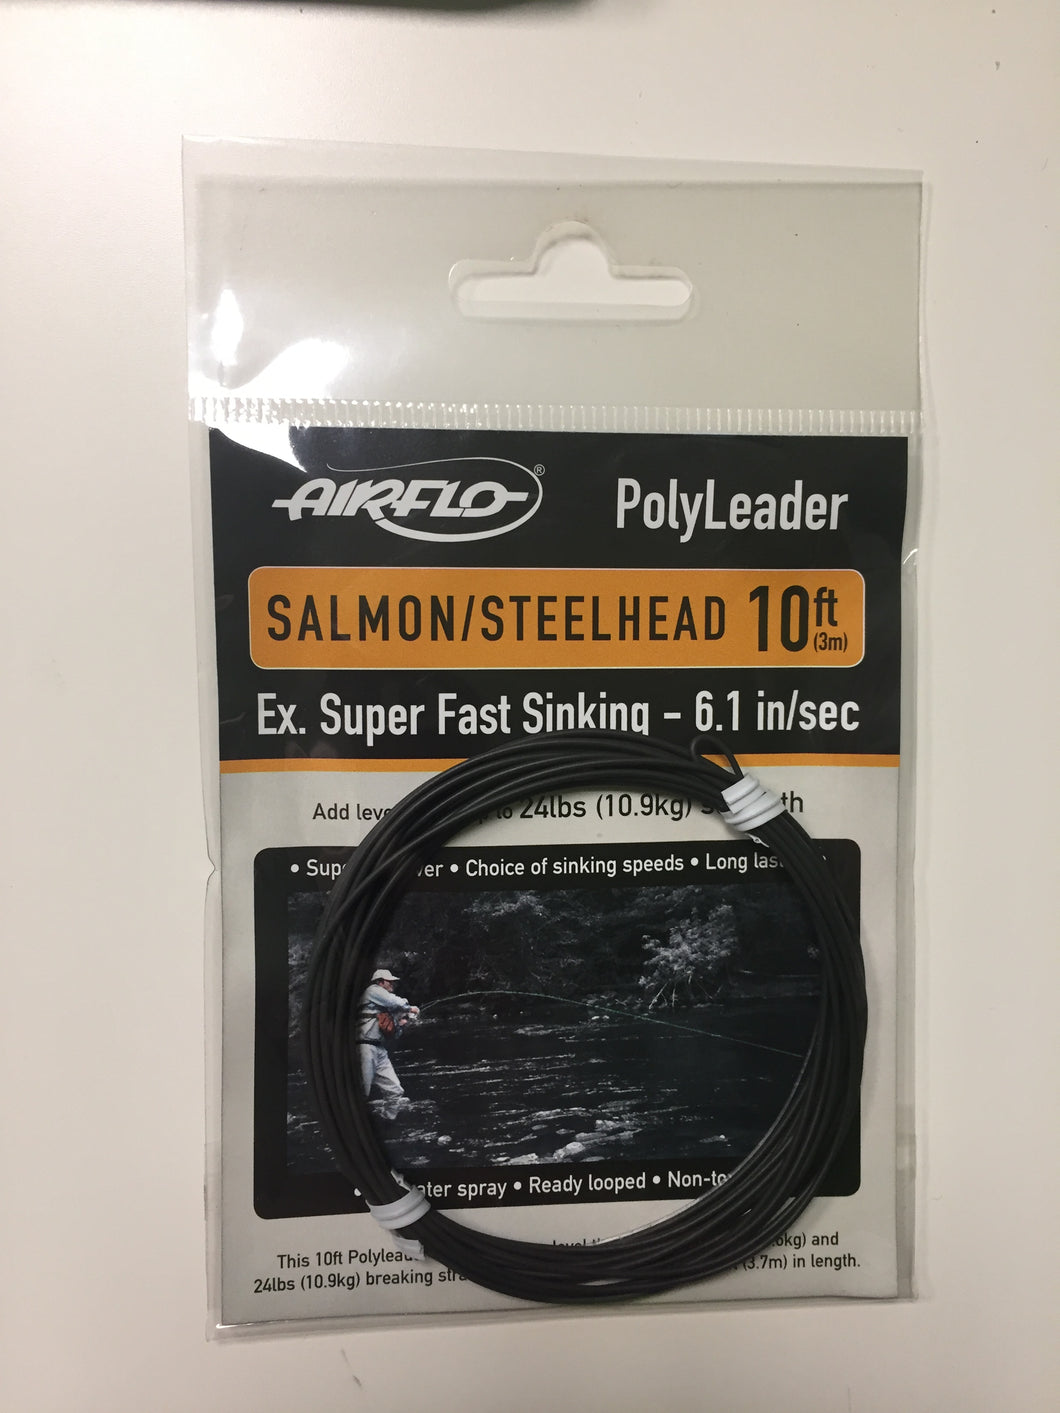 Airflo Salmon/Steelhead Polyleader (Grey)(10ft/Ex. Super Fast Sinking/24lbs)